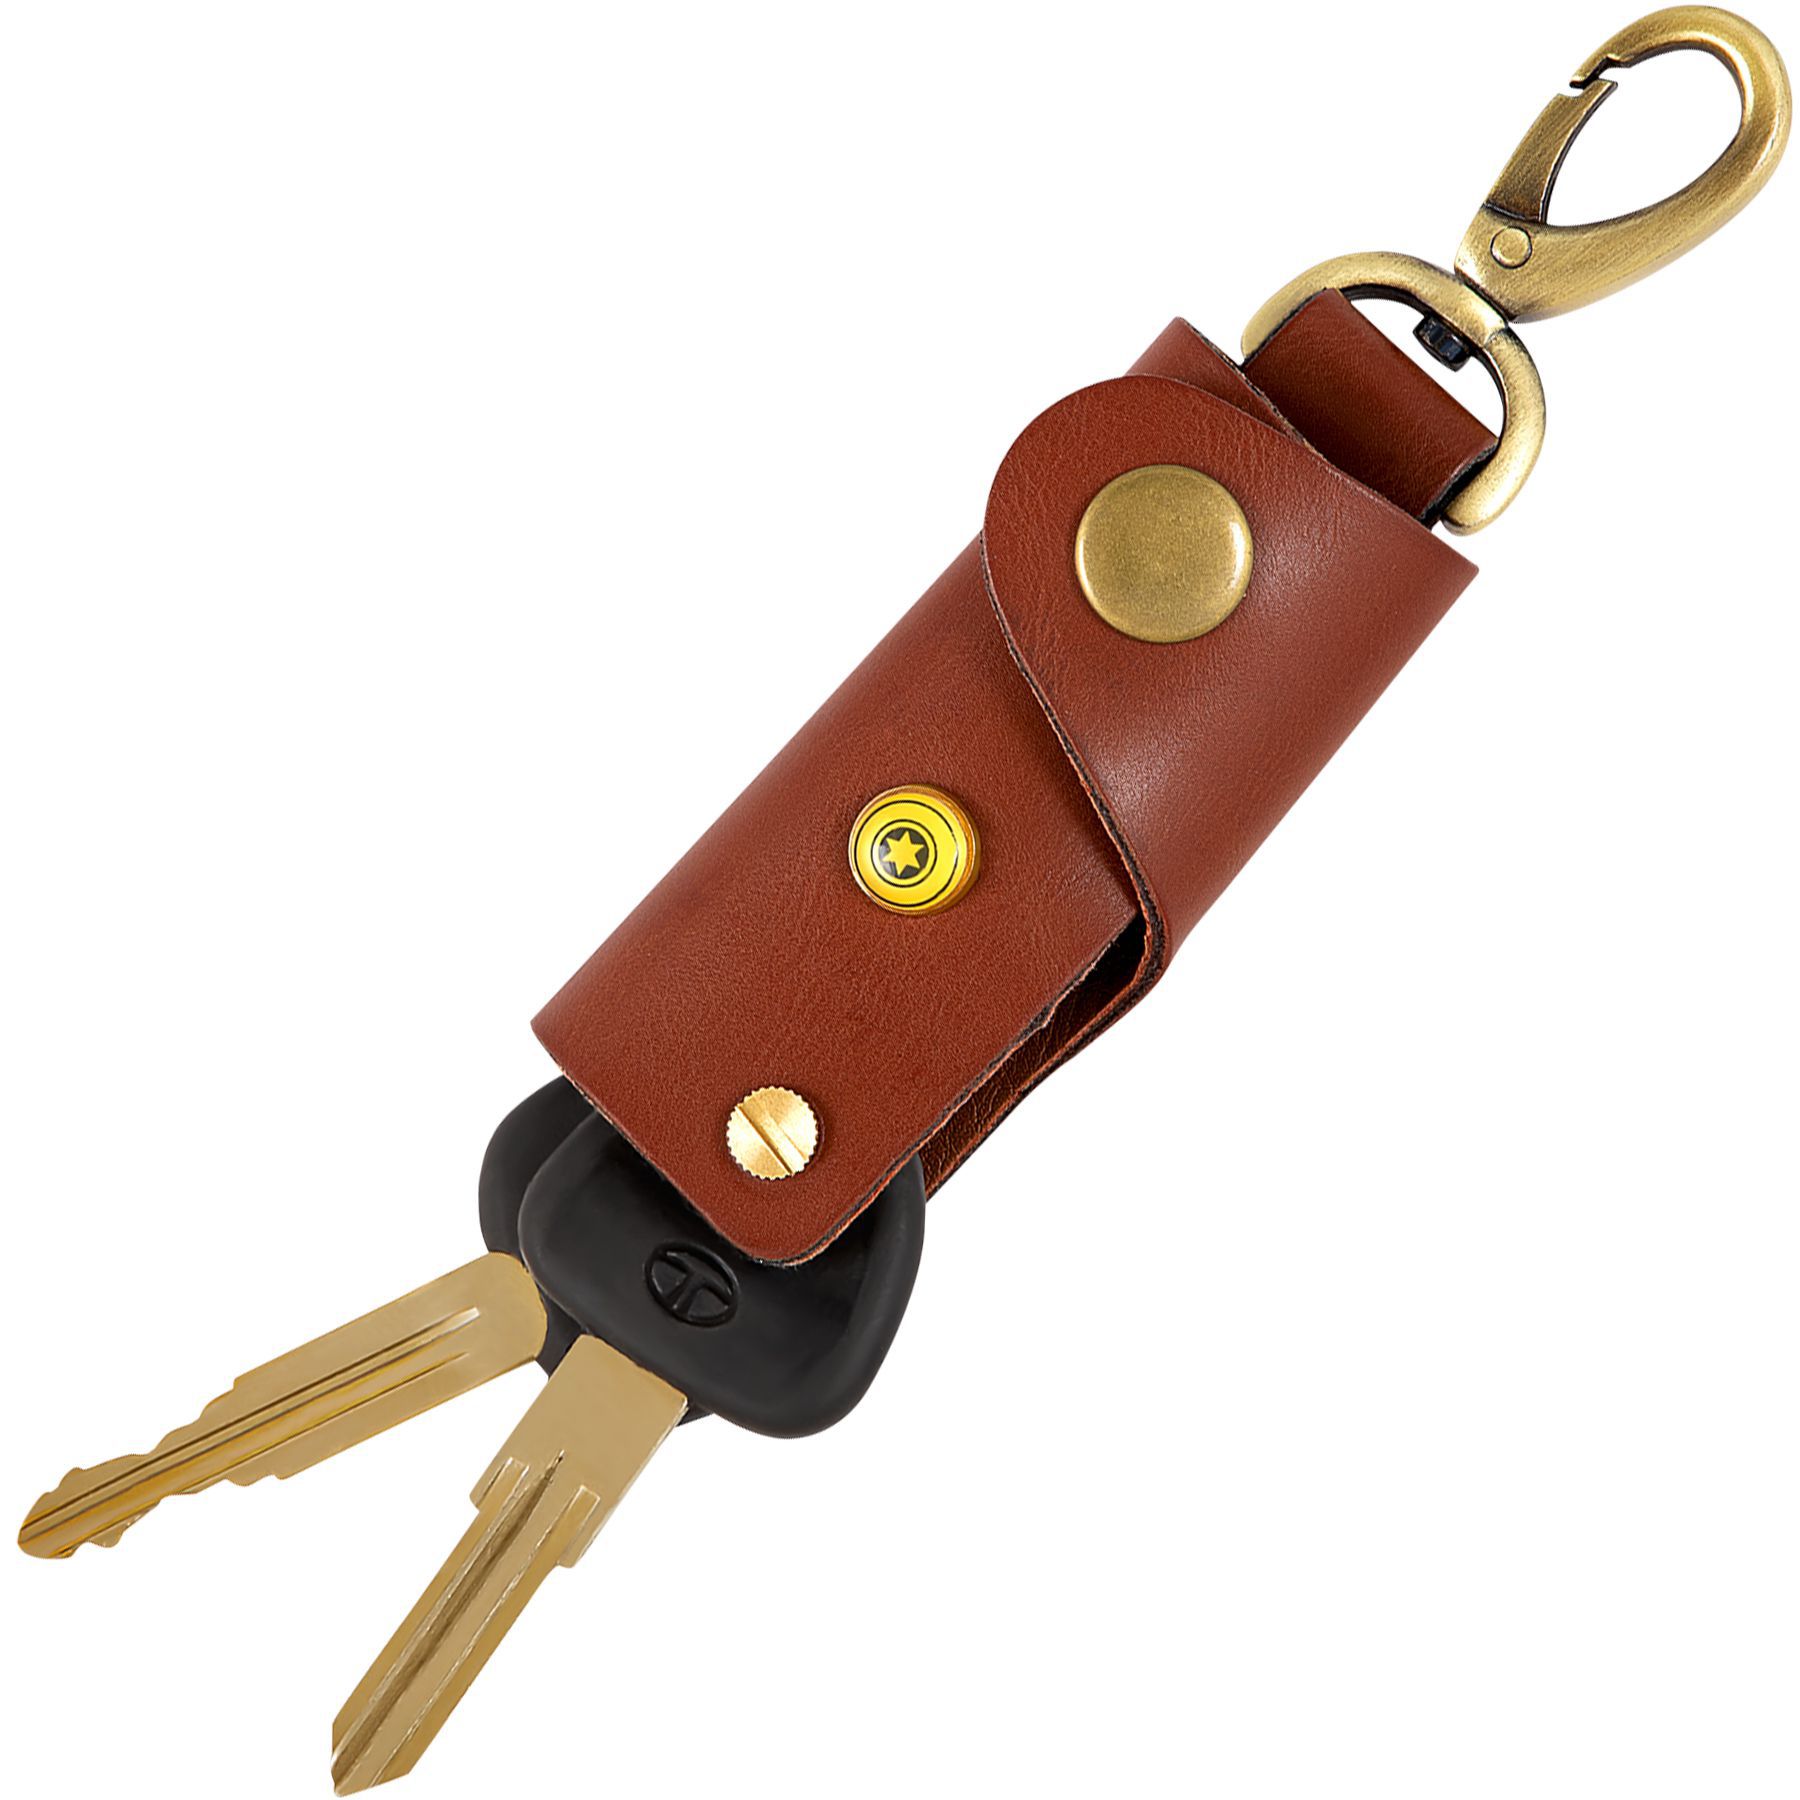 keystax compact key holder